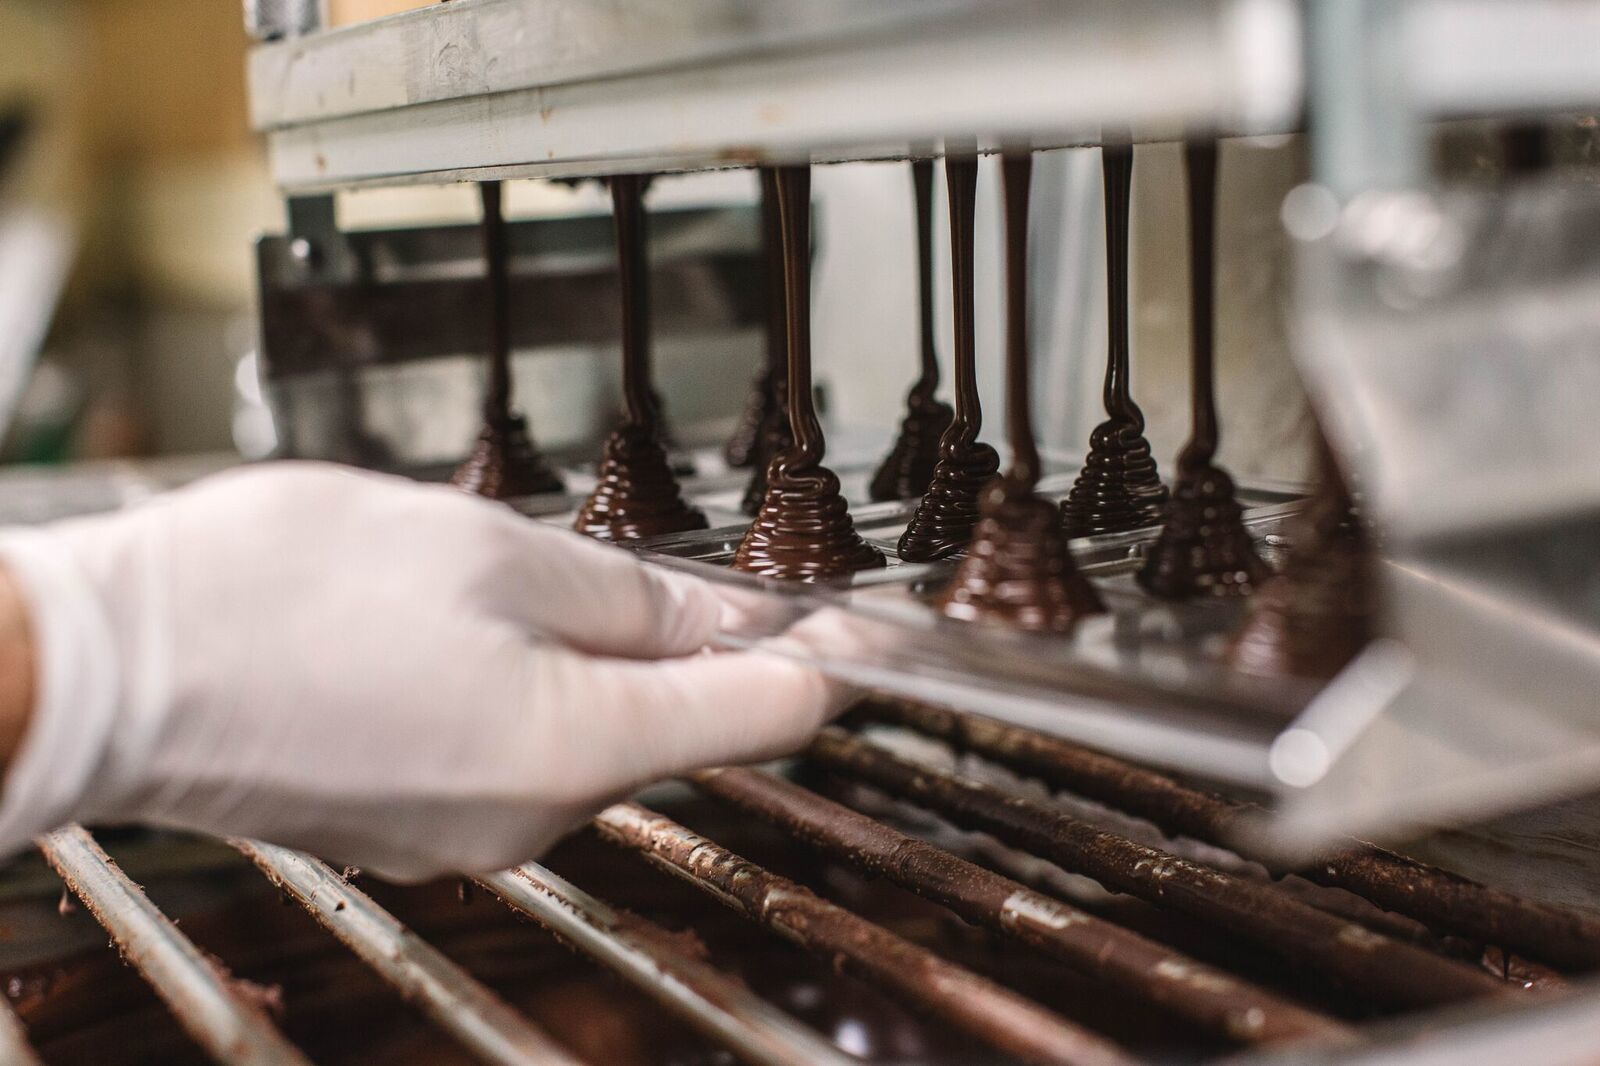 chocolate factory